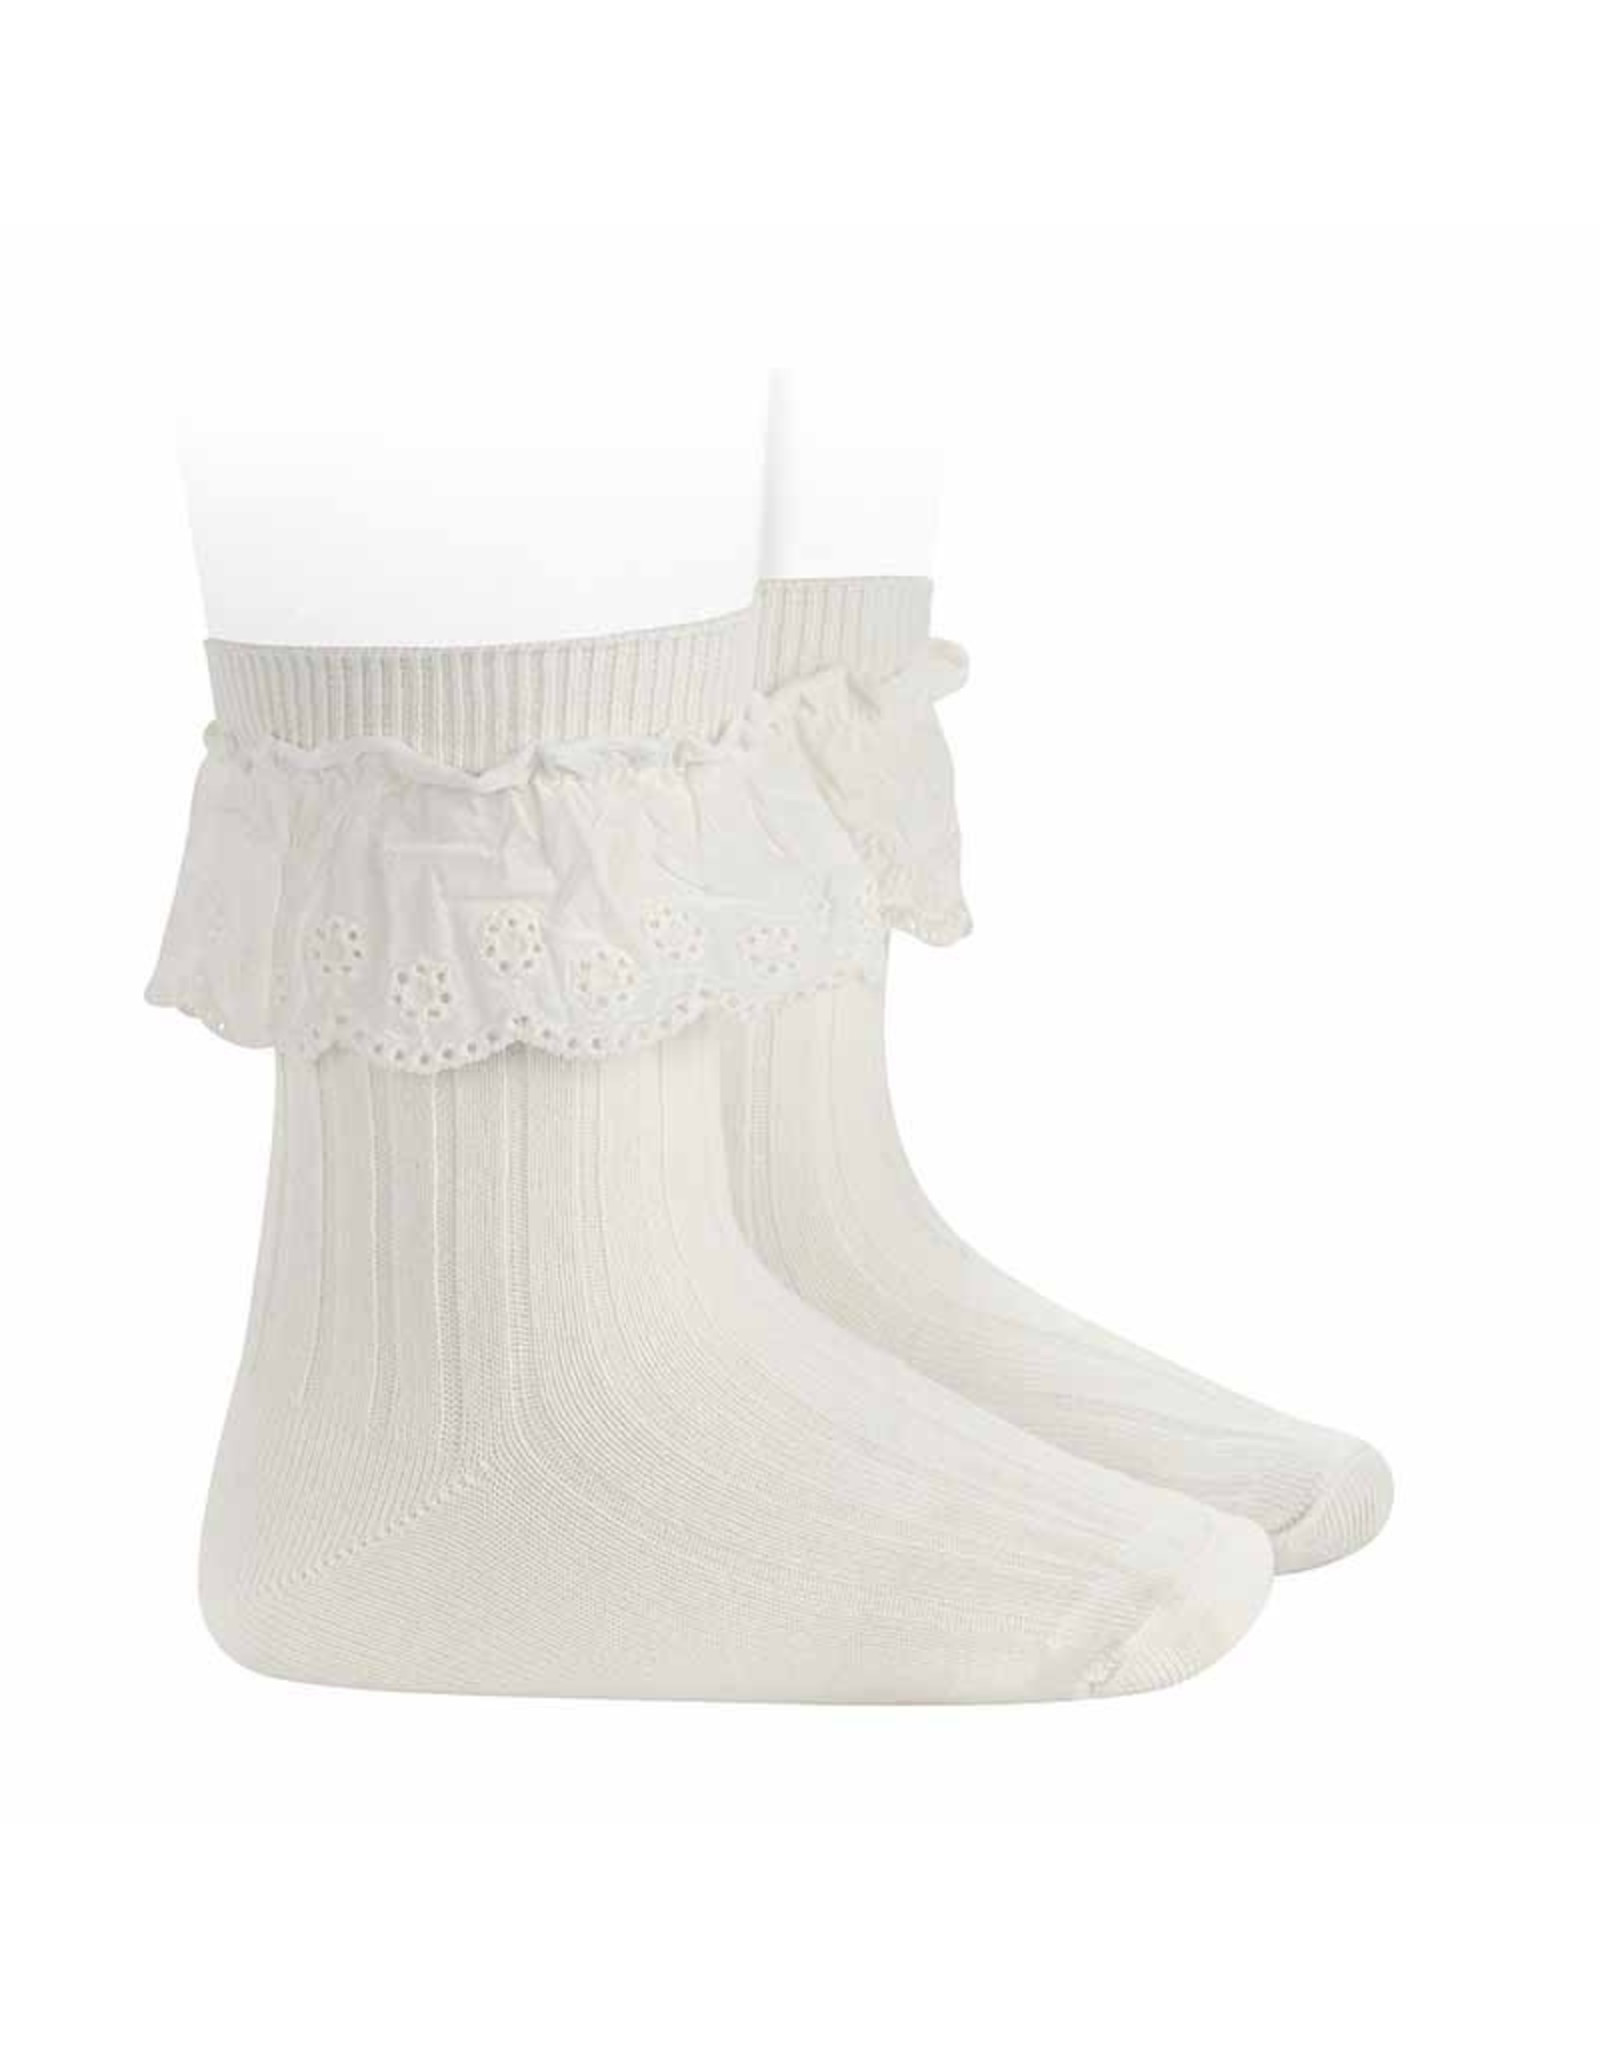 CONDOR Cream Embroidered Batiste Short Socks